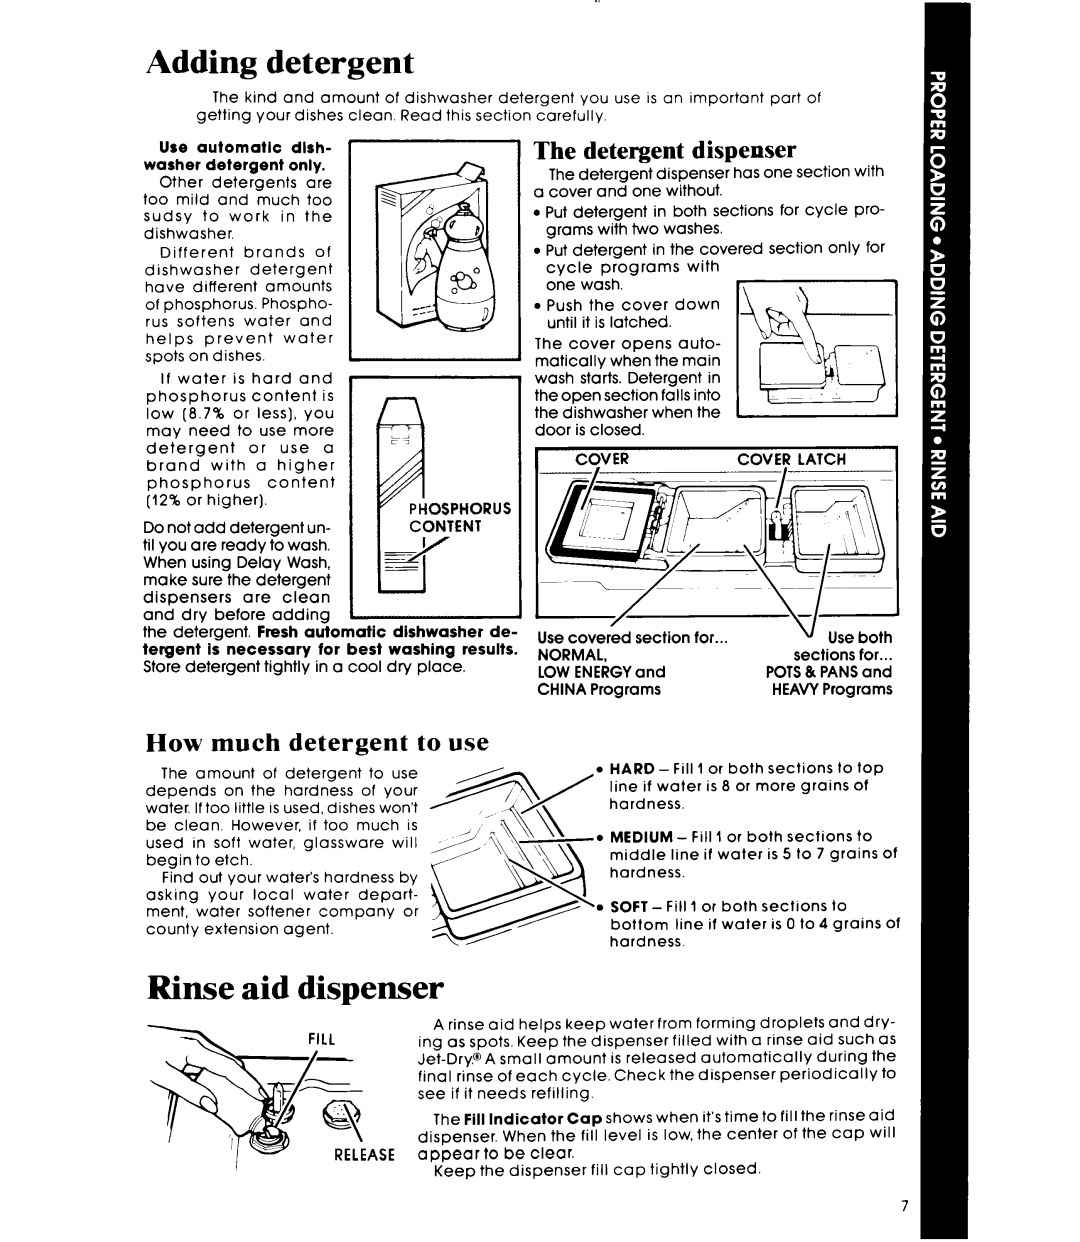 Whirlpool DU9700XR manual Adding detergent, Rinse aid dispenser, The detergent dispenser, How much detergent to use 